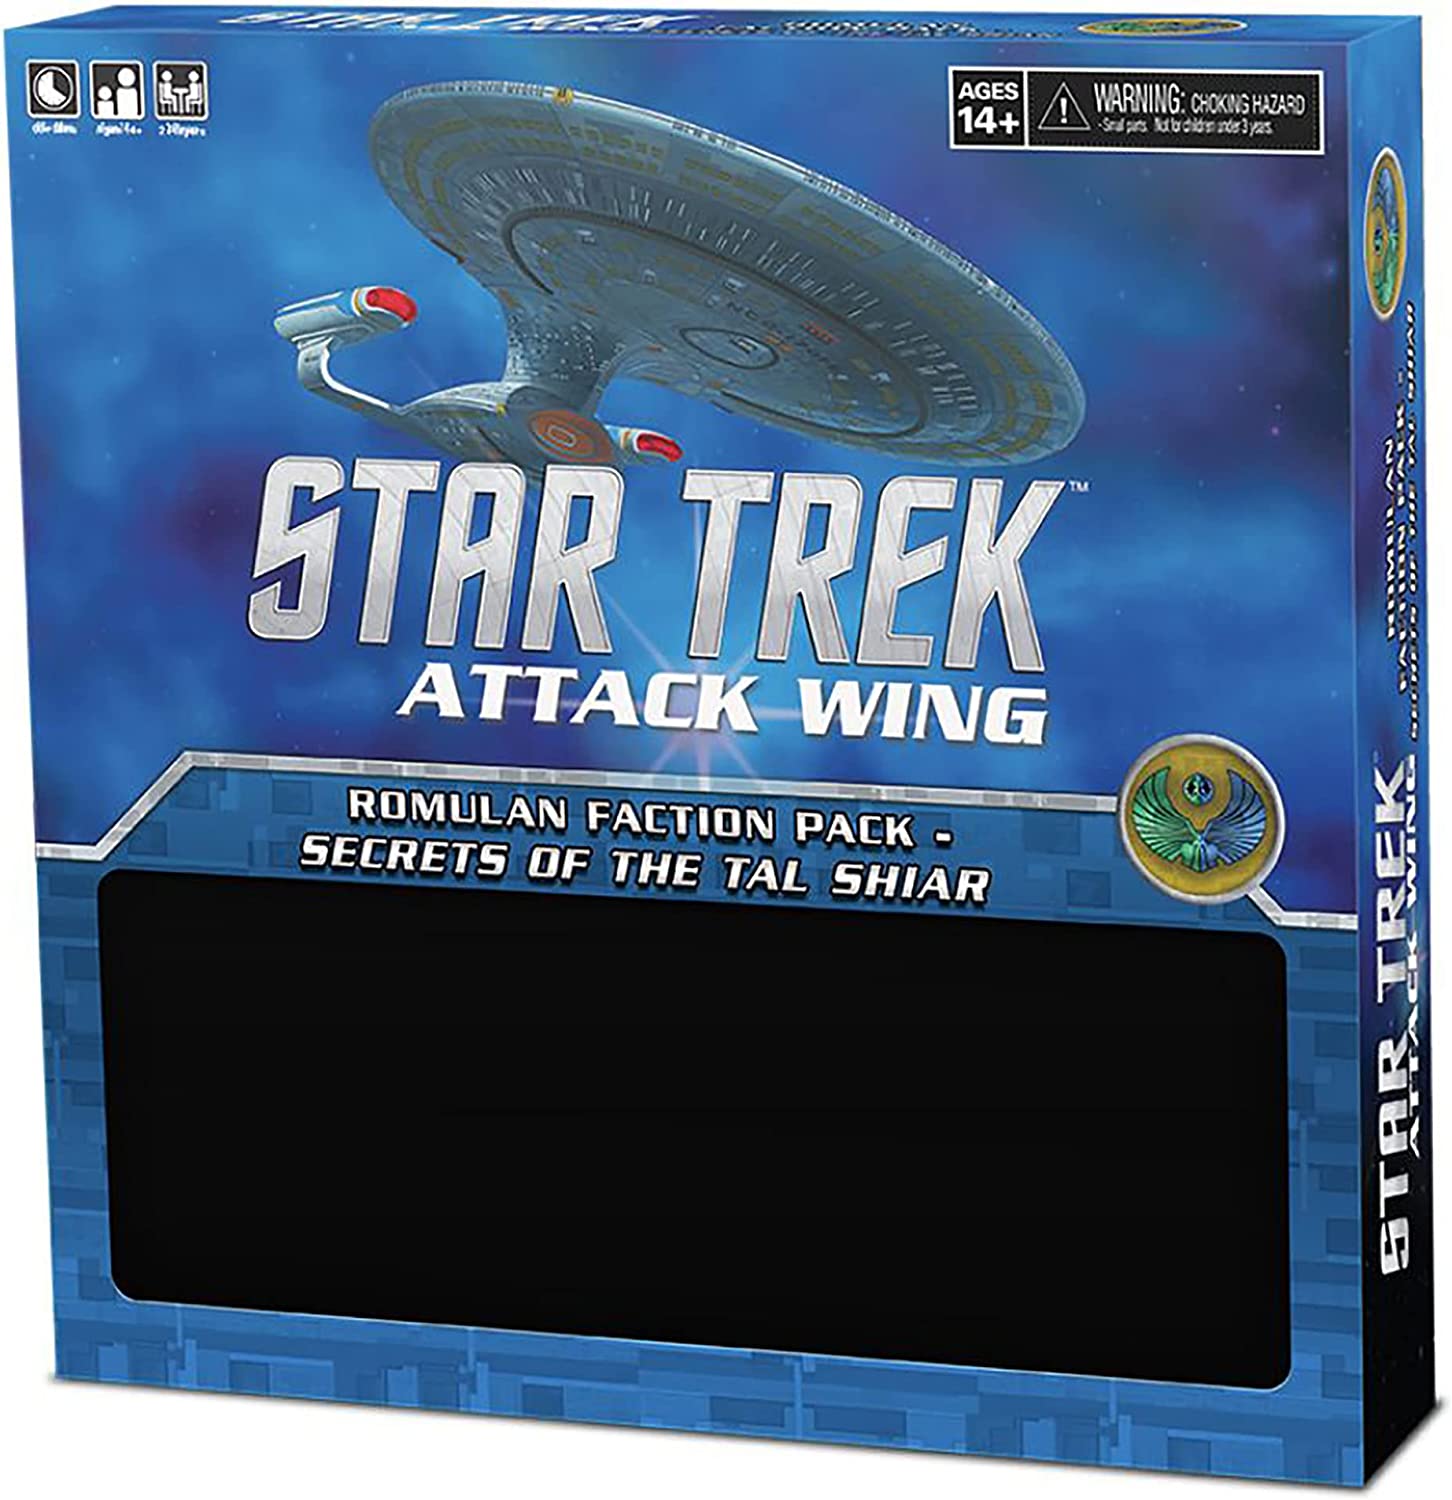 Star Trek Attack Wing - Romulan Faction Pack - Secrets of the Tal Shiar